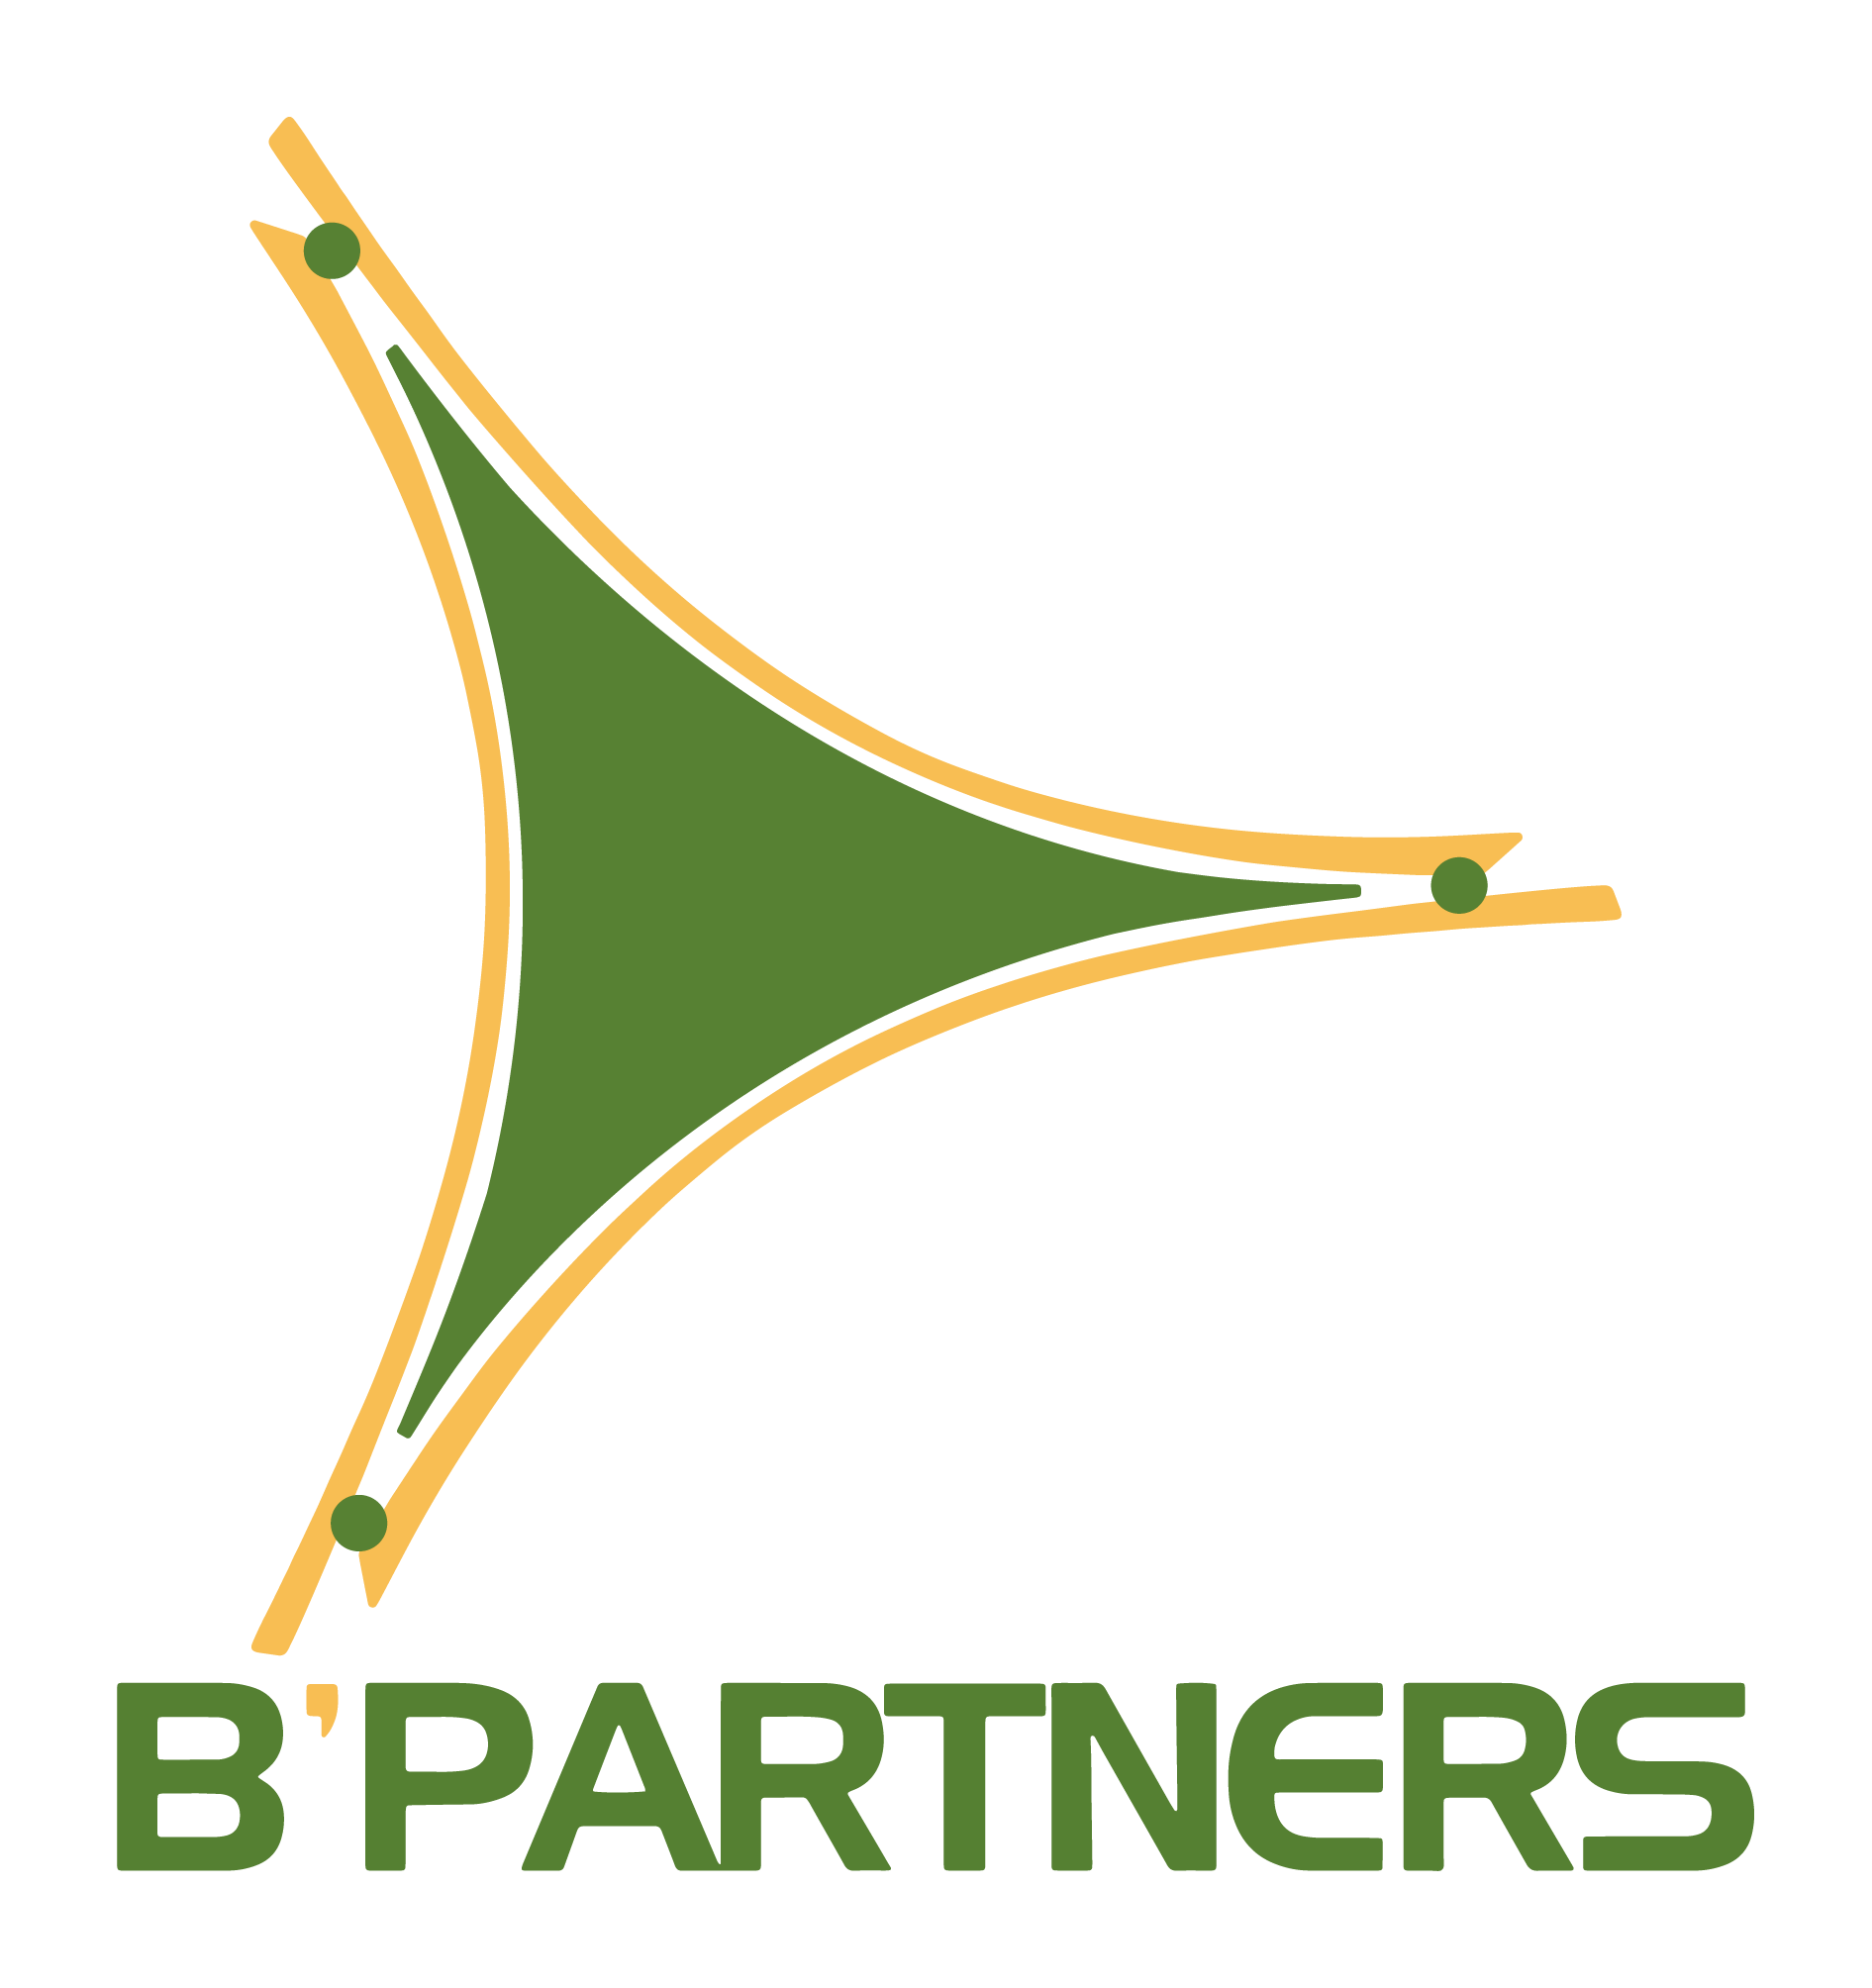  B'Partners logo